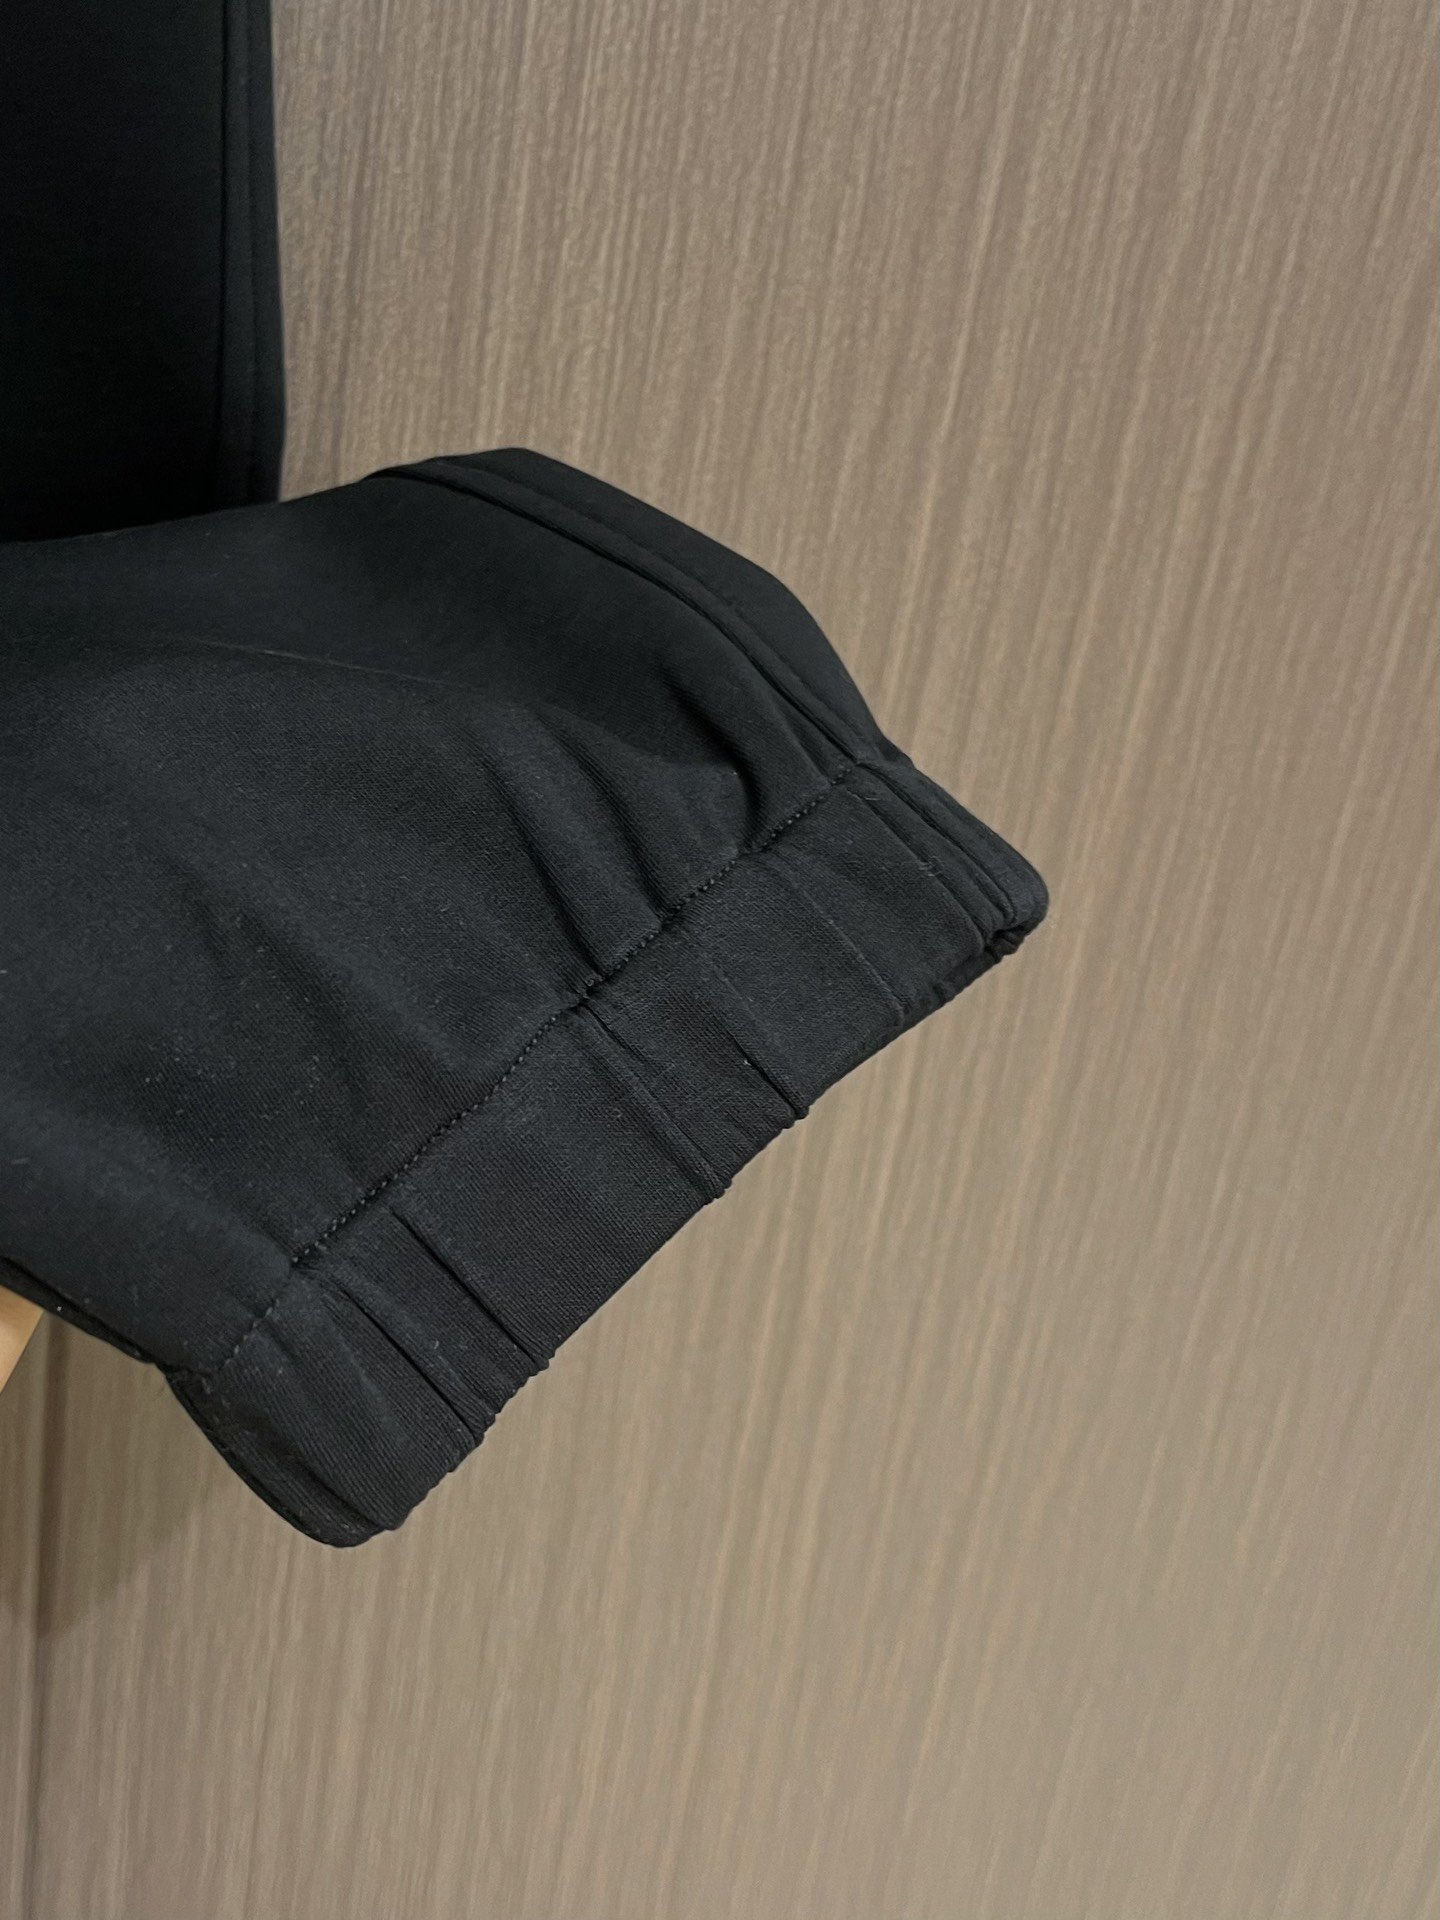 Burberry战马刺绣标识束腿休闲卫裤全新欧棉质地最大的特点就是柔软舒适不起球不变形绝对质量上的王者品